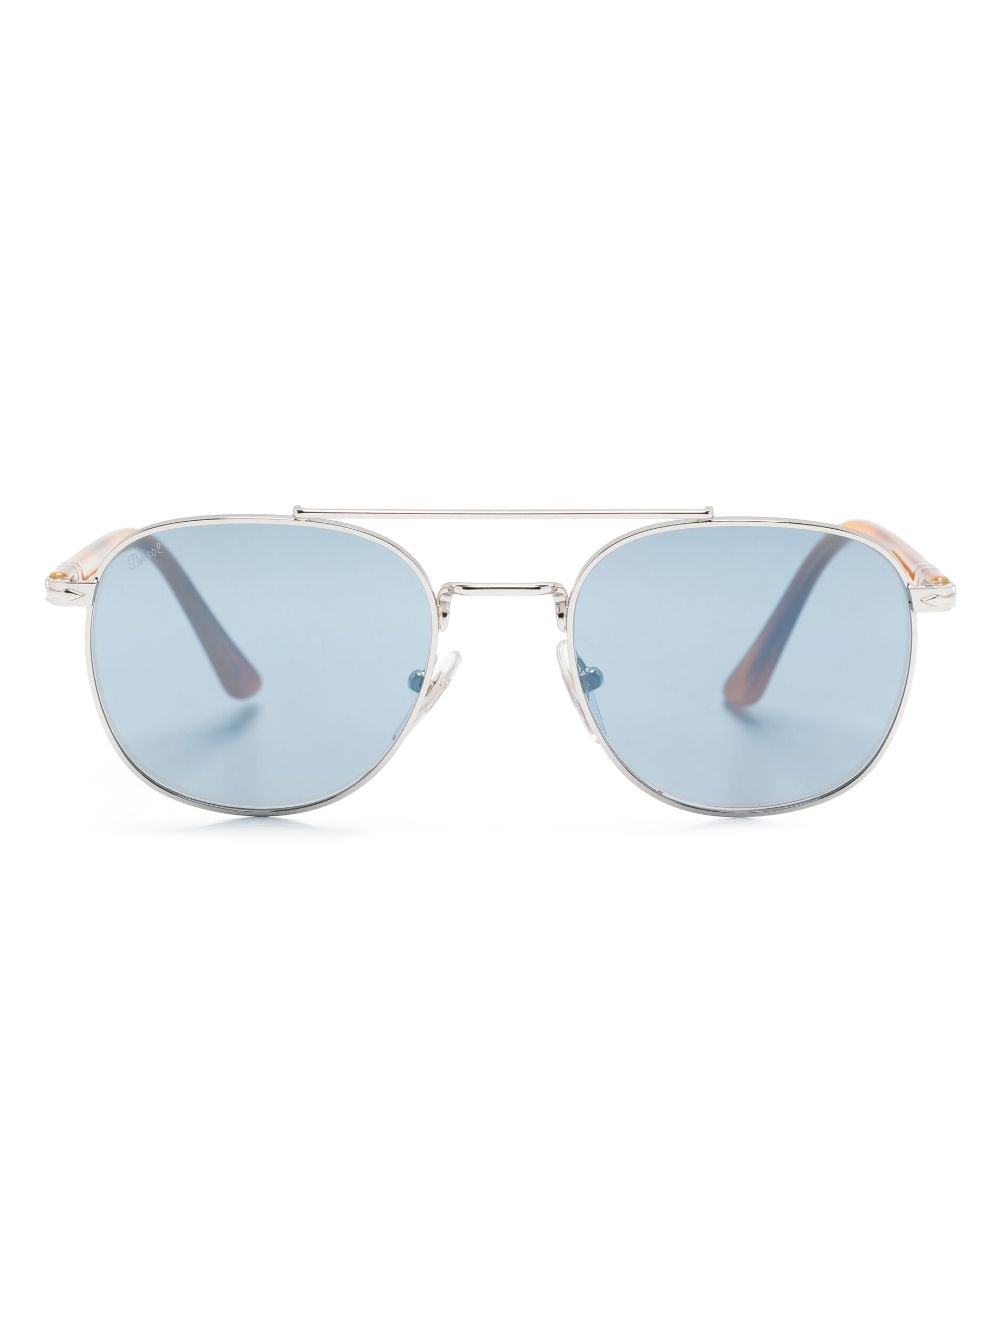 Persol tortoiseshell-effect round-frame sunglasses - Silver von Persol